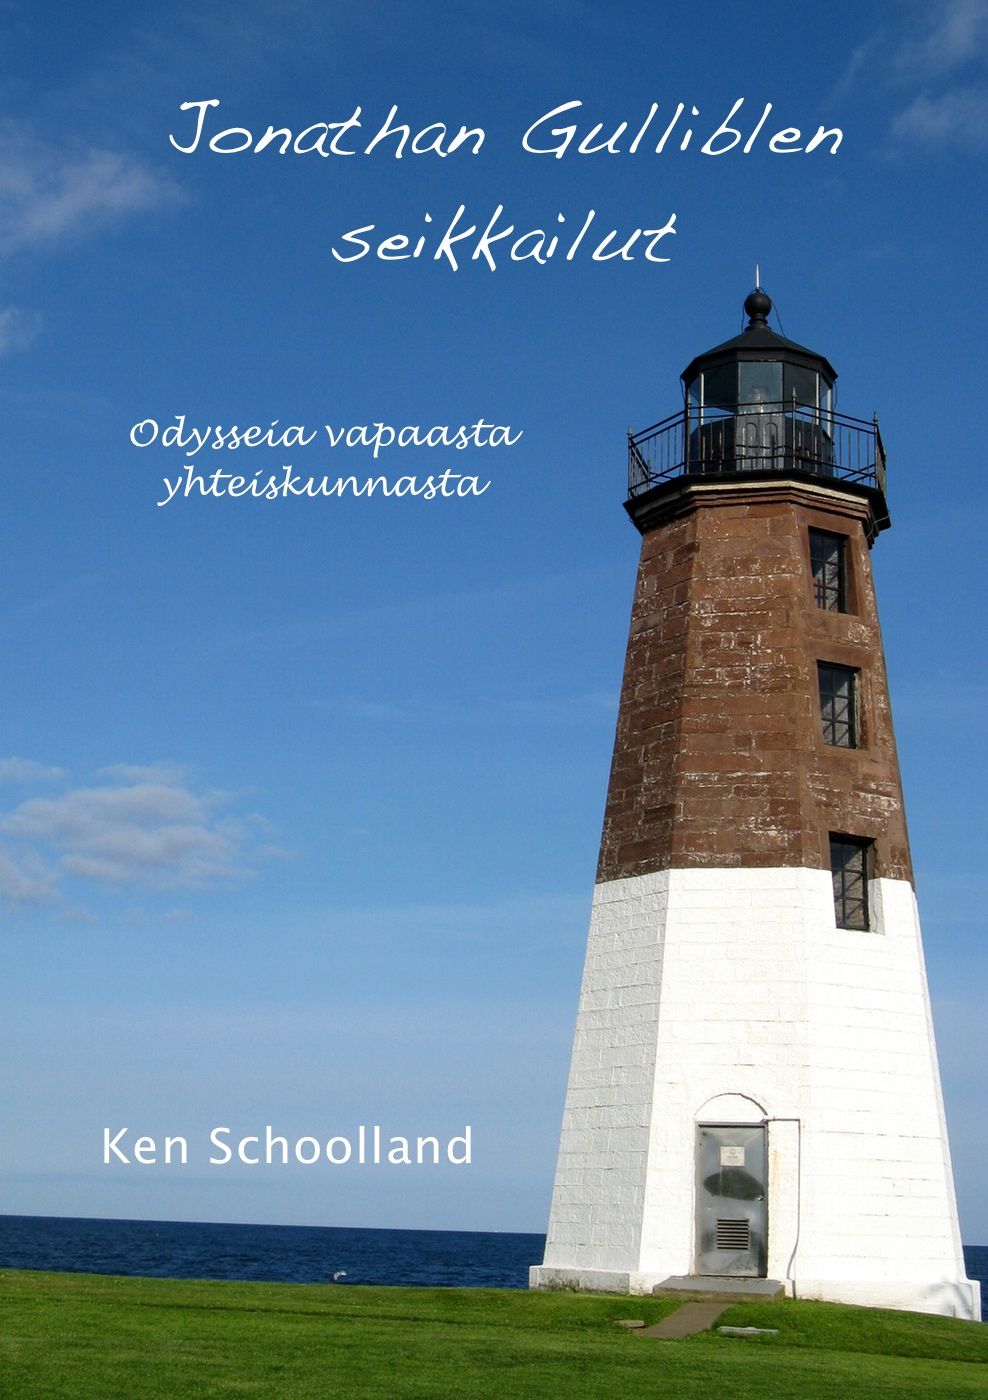 Jonathan Gulliblen seikkailut, e-bok av Ken Schoolland